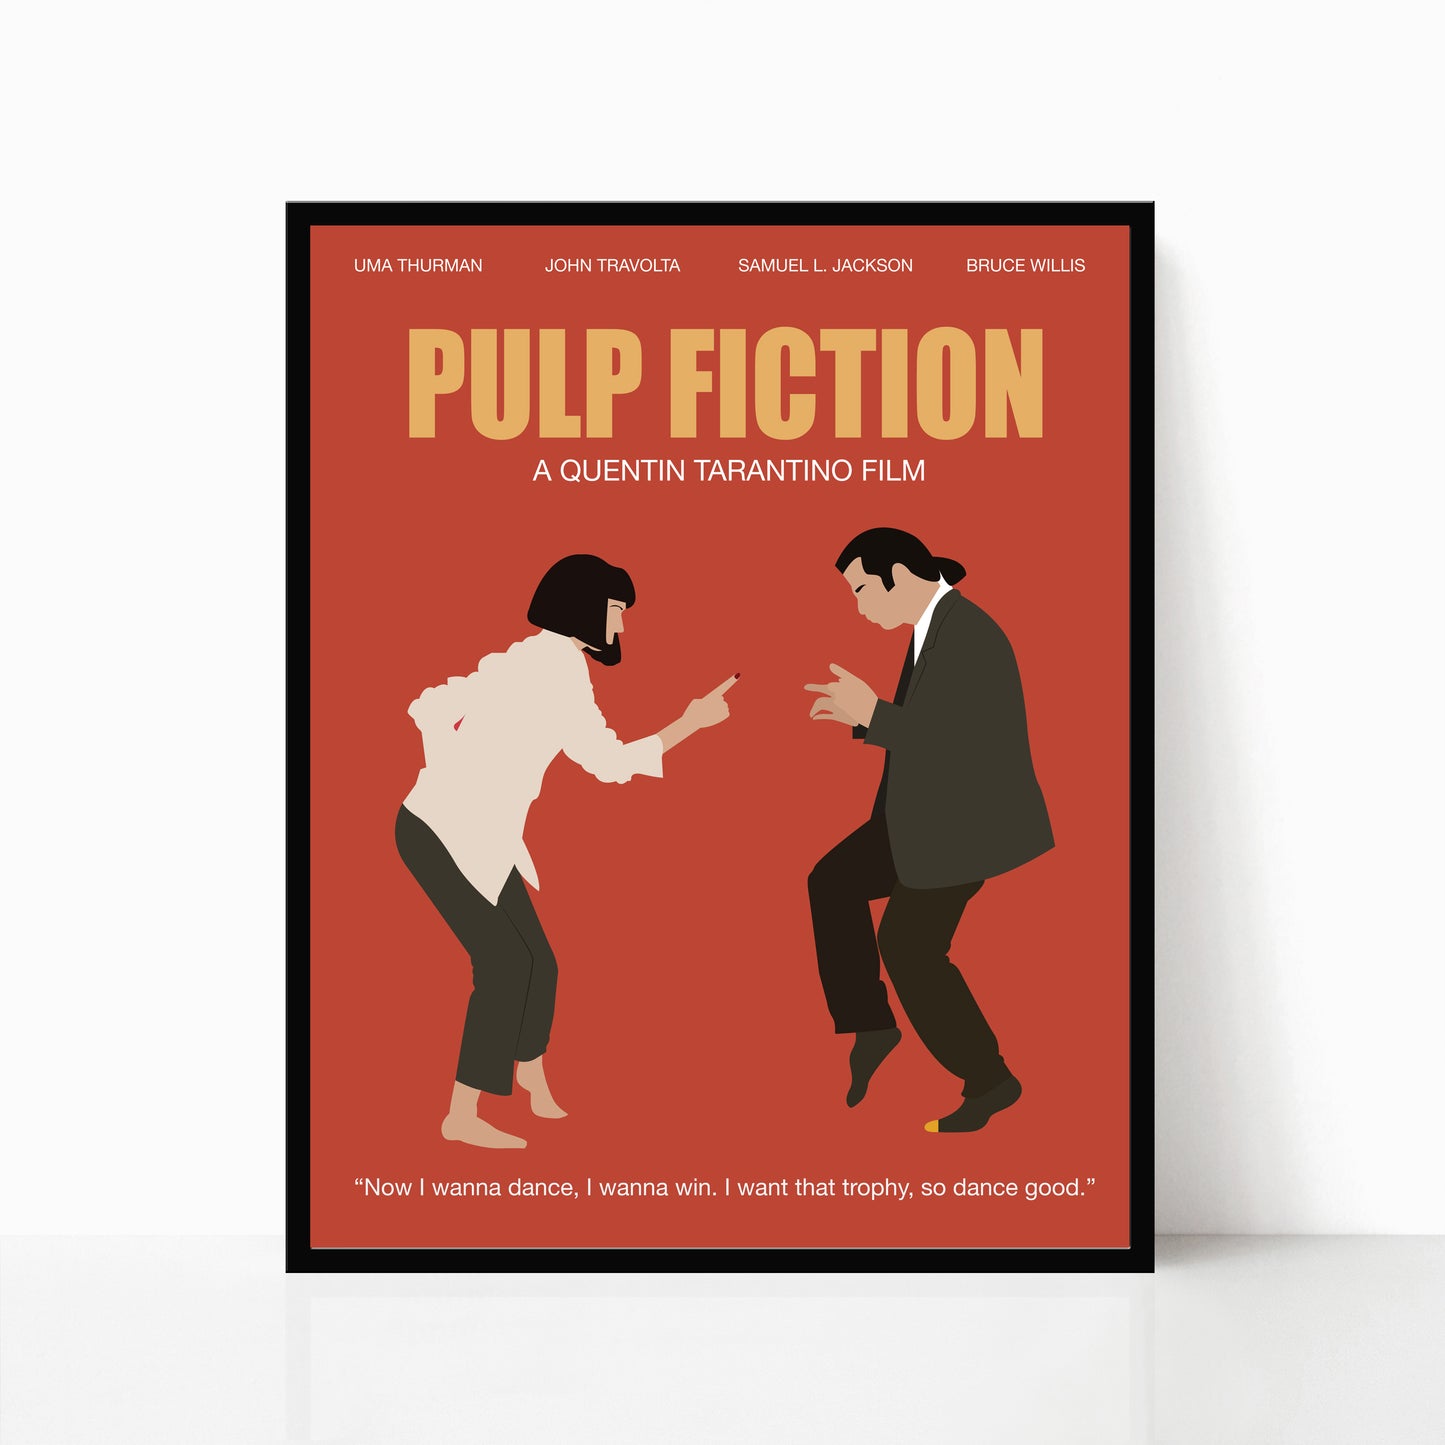 Pulp Fiction Minimalist Movie Poster